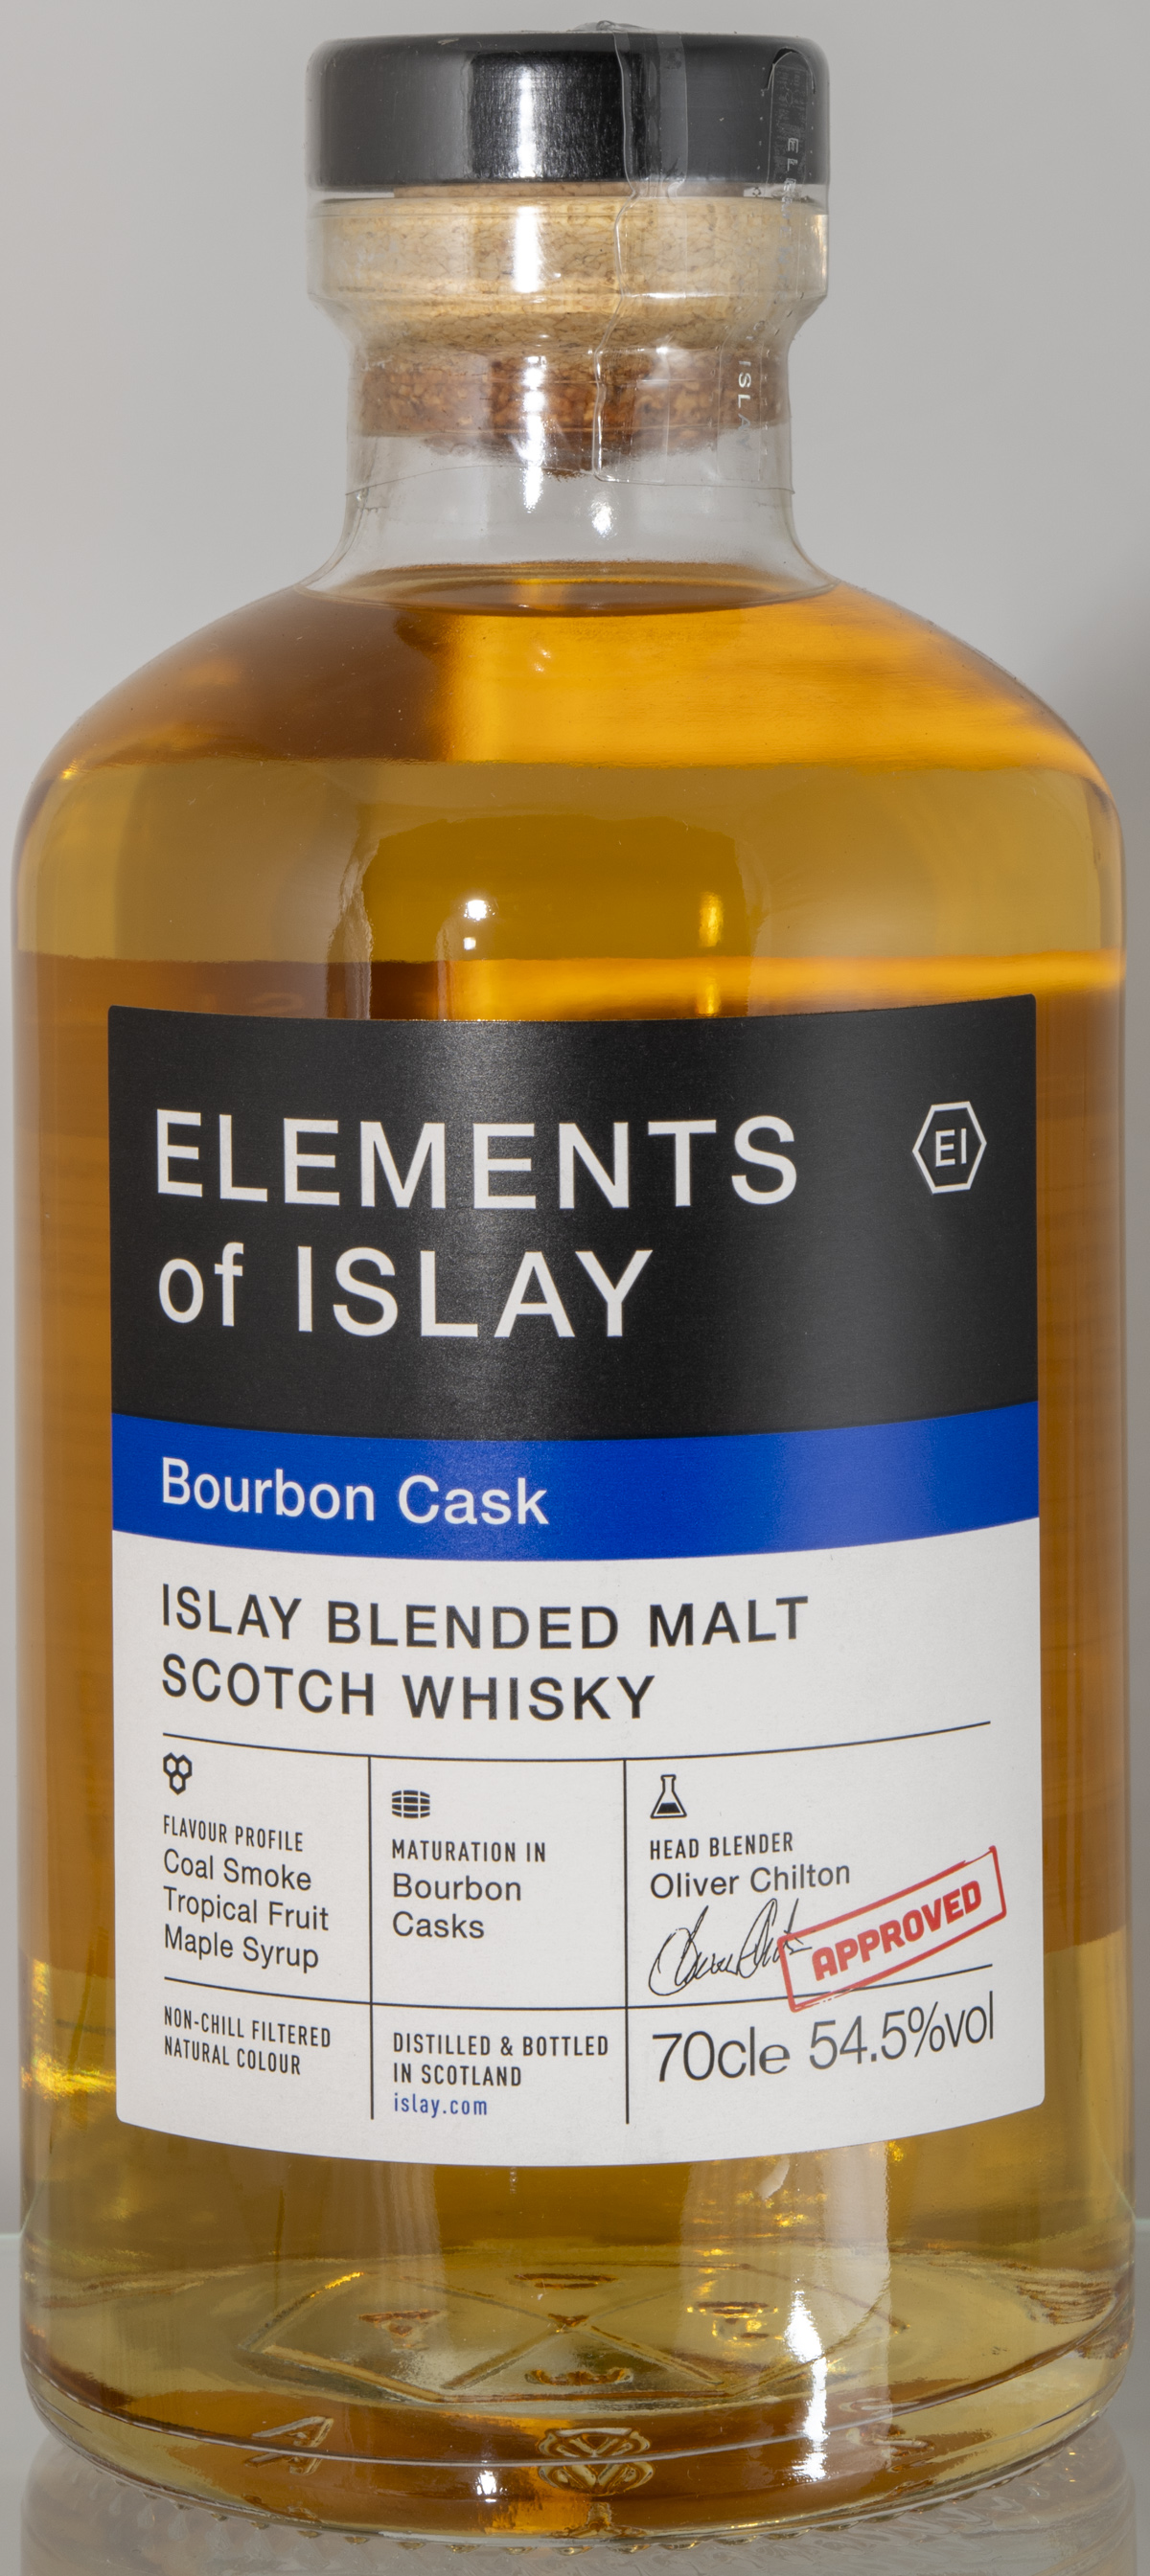 Billede: D85_8316 - Elements of Islay - Bourbon Cask - bottle front.jpg